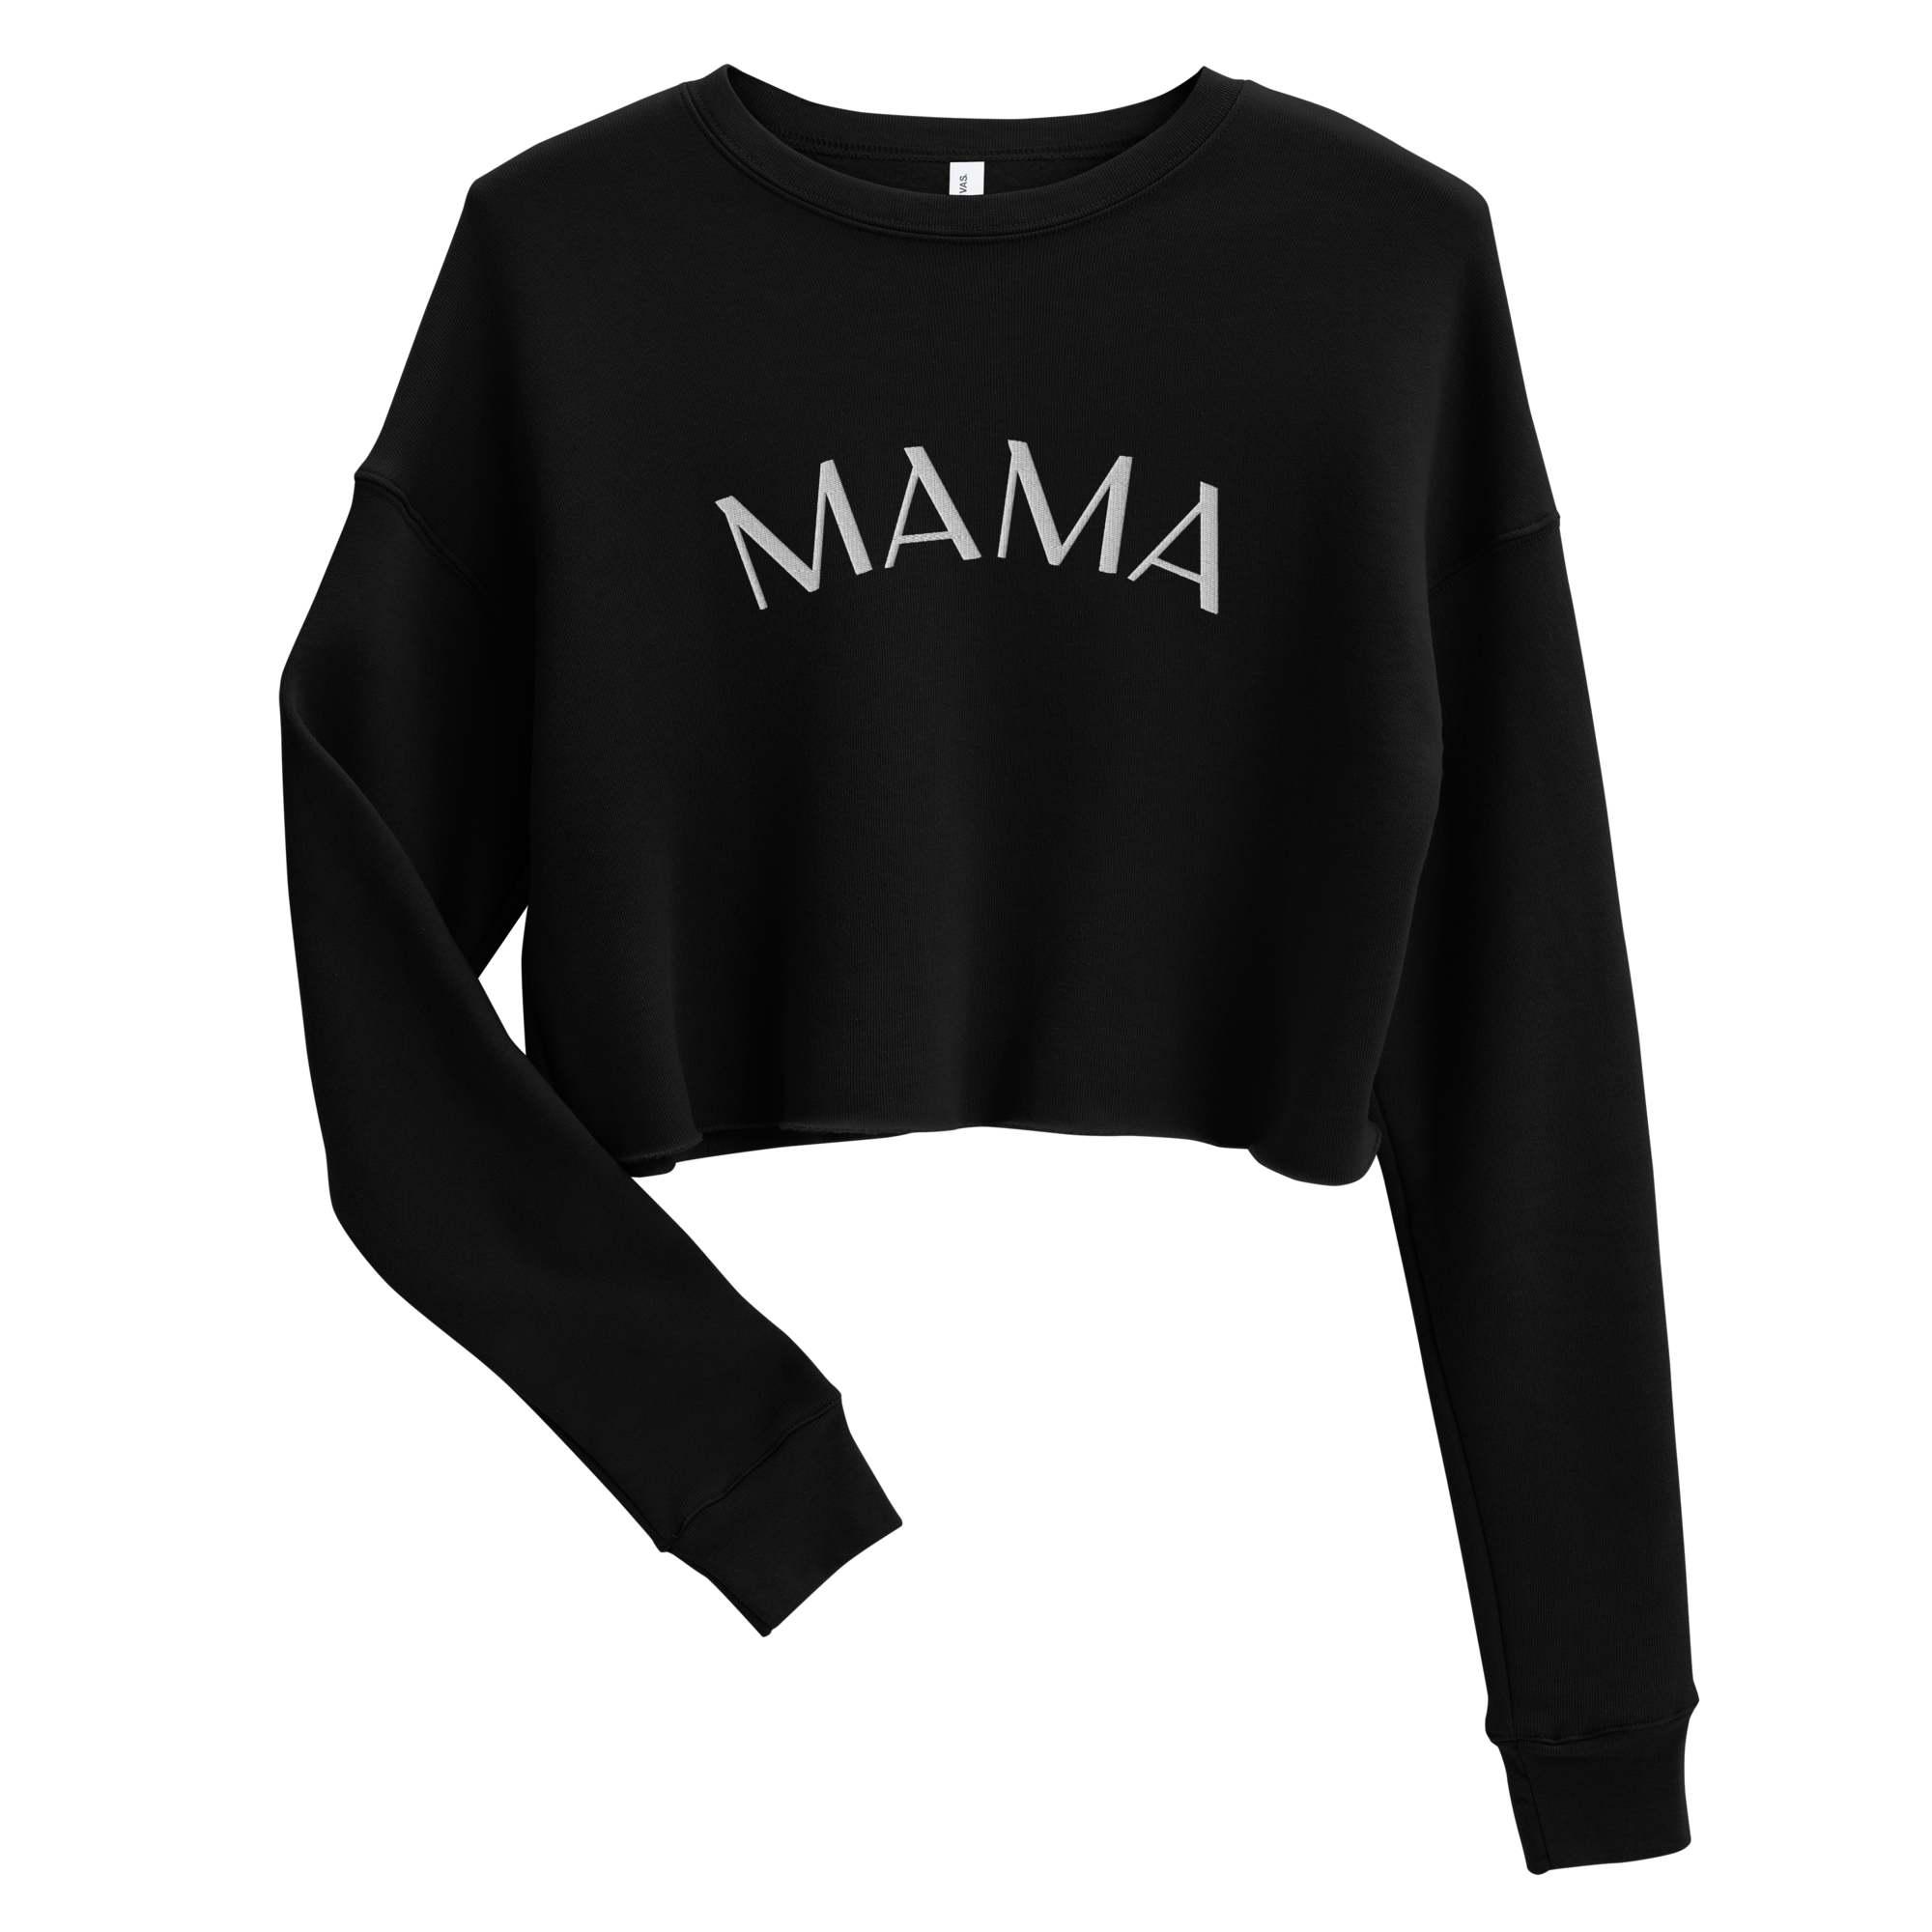 Women's mama sweatshirt in black